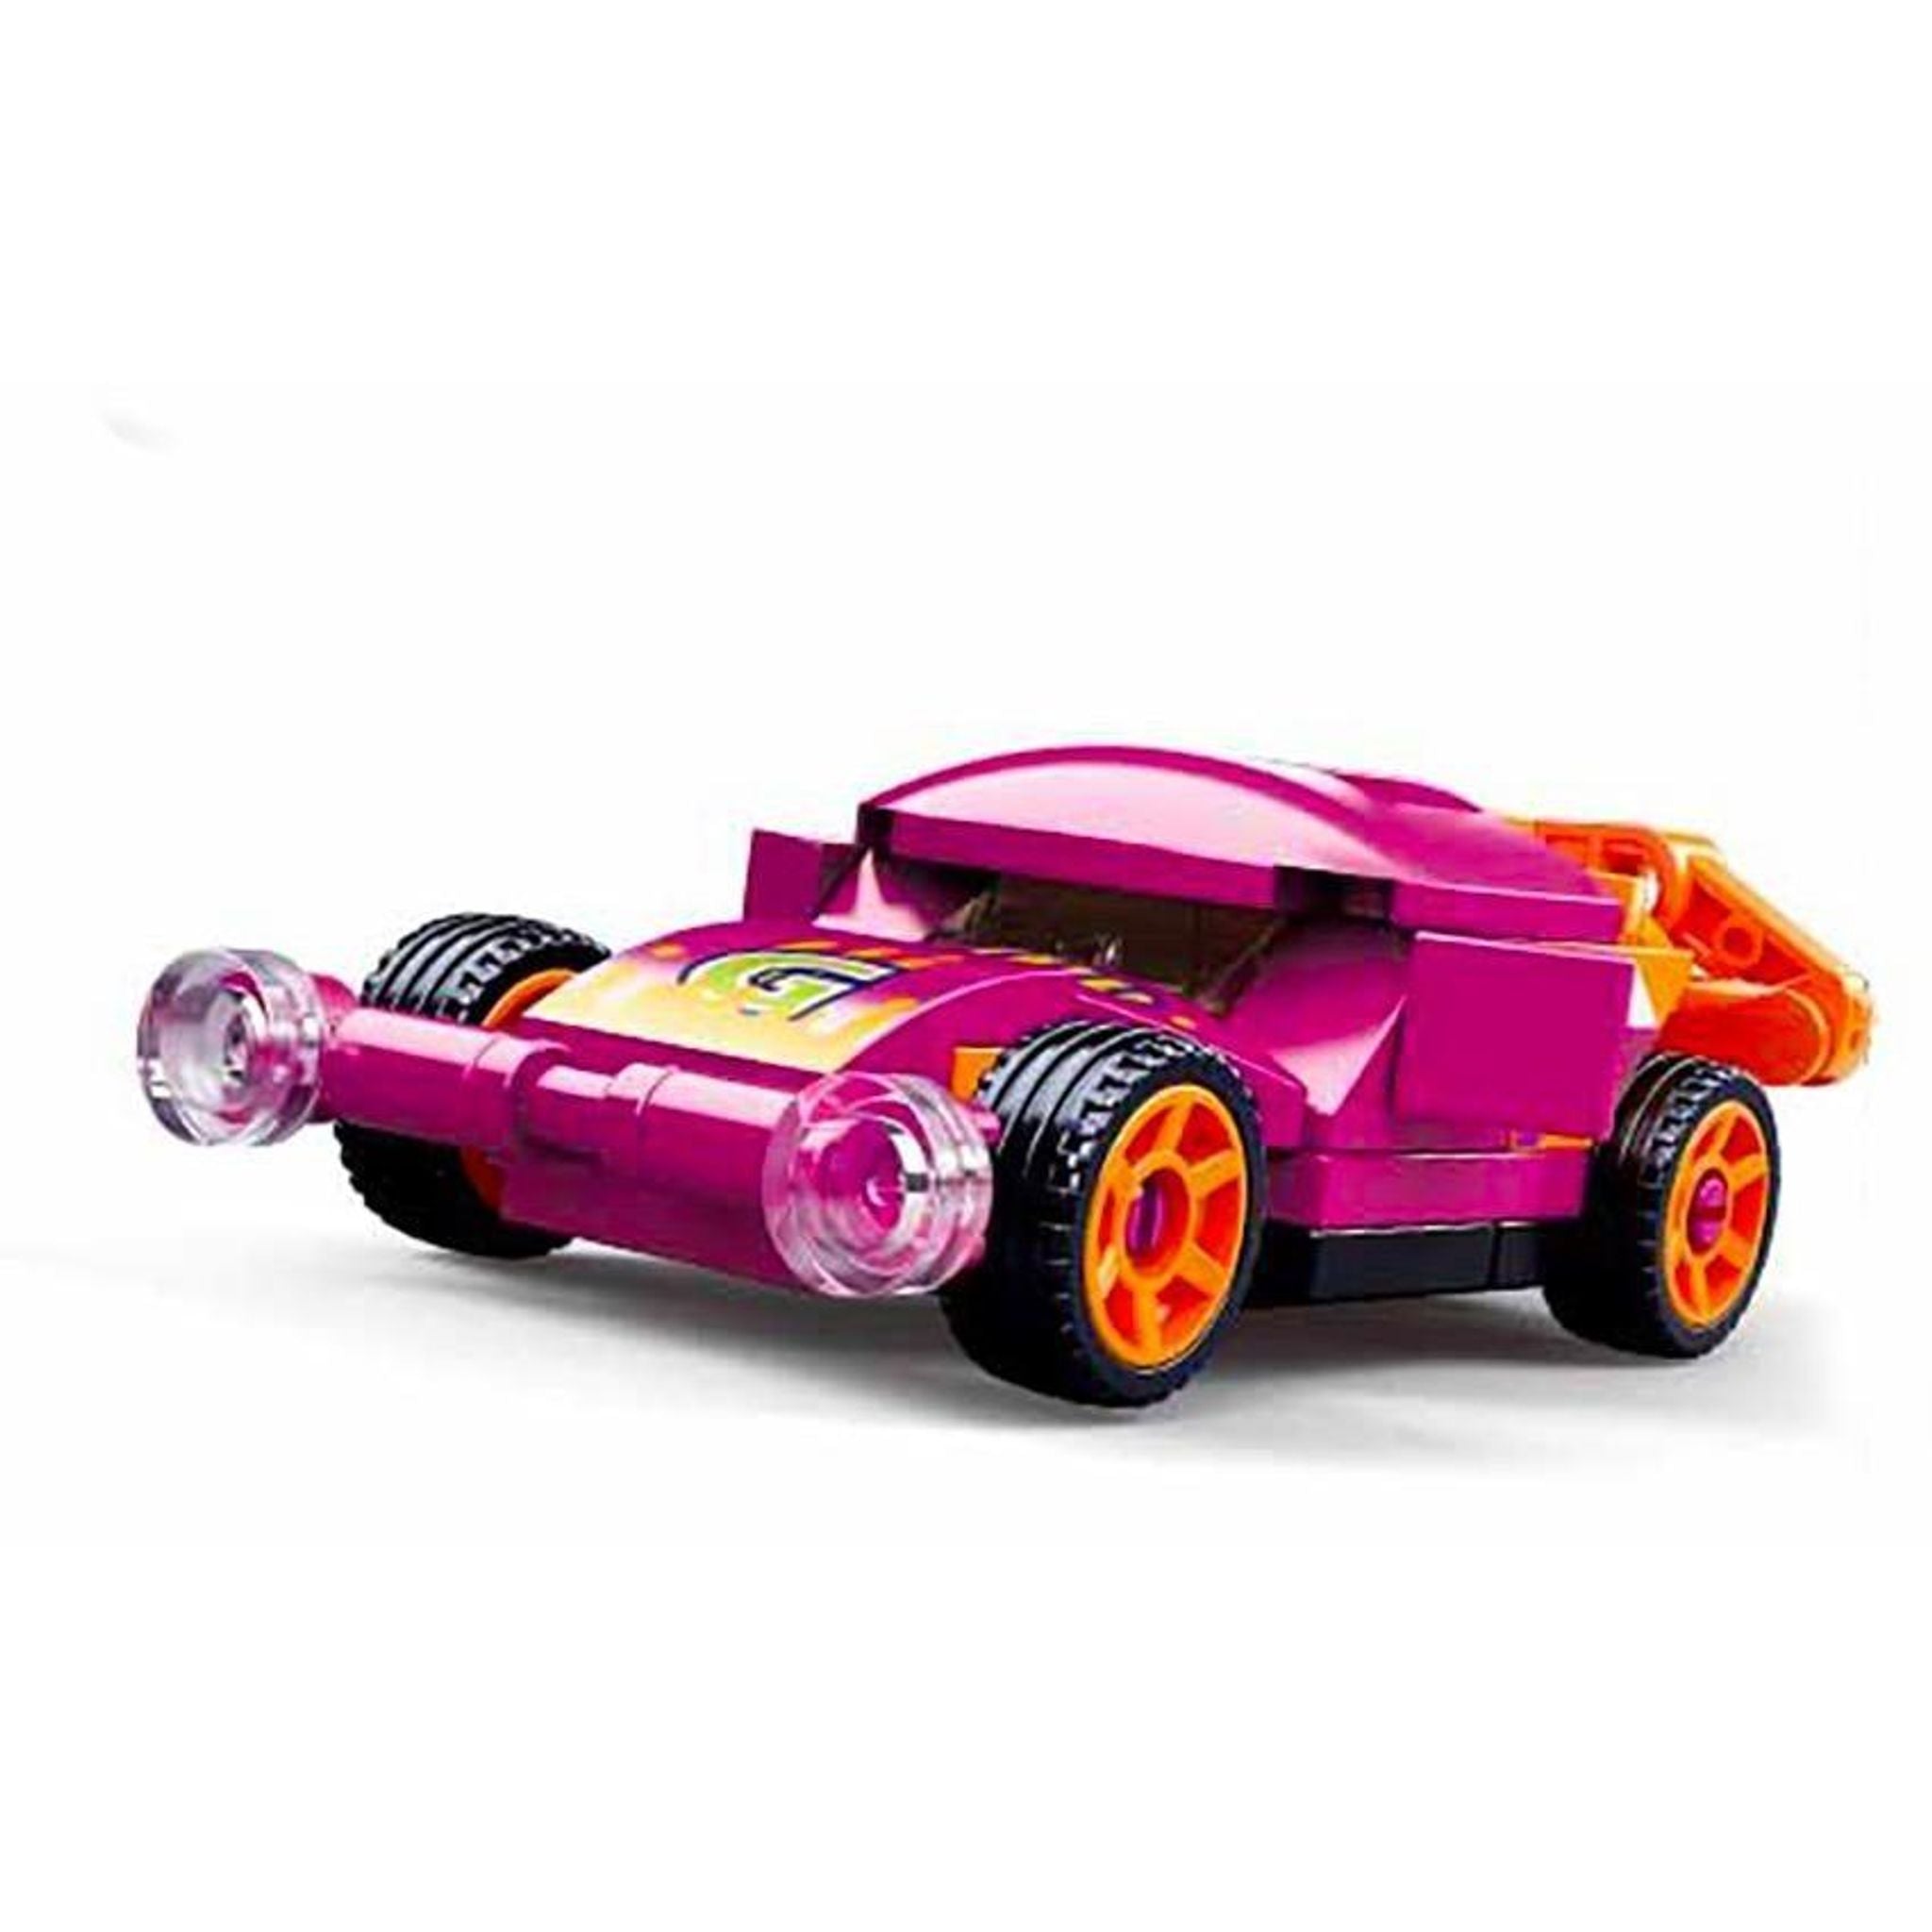 Power Bricks Pull Back Car - Purple Wing - Toybox Tales